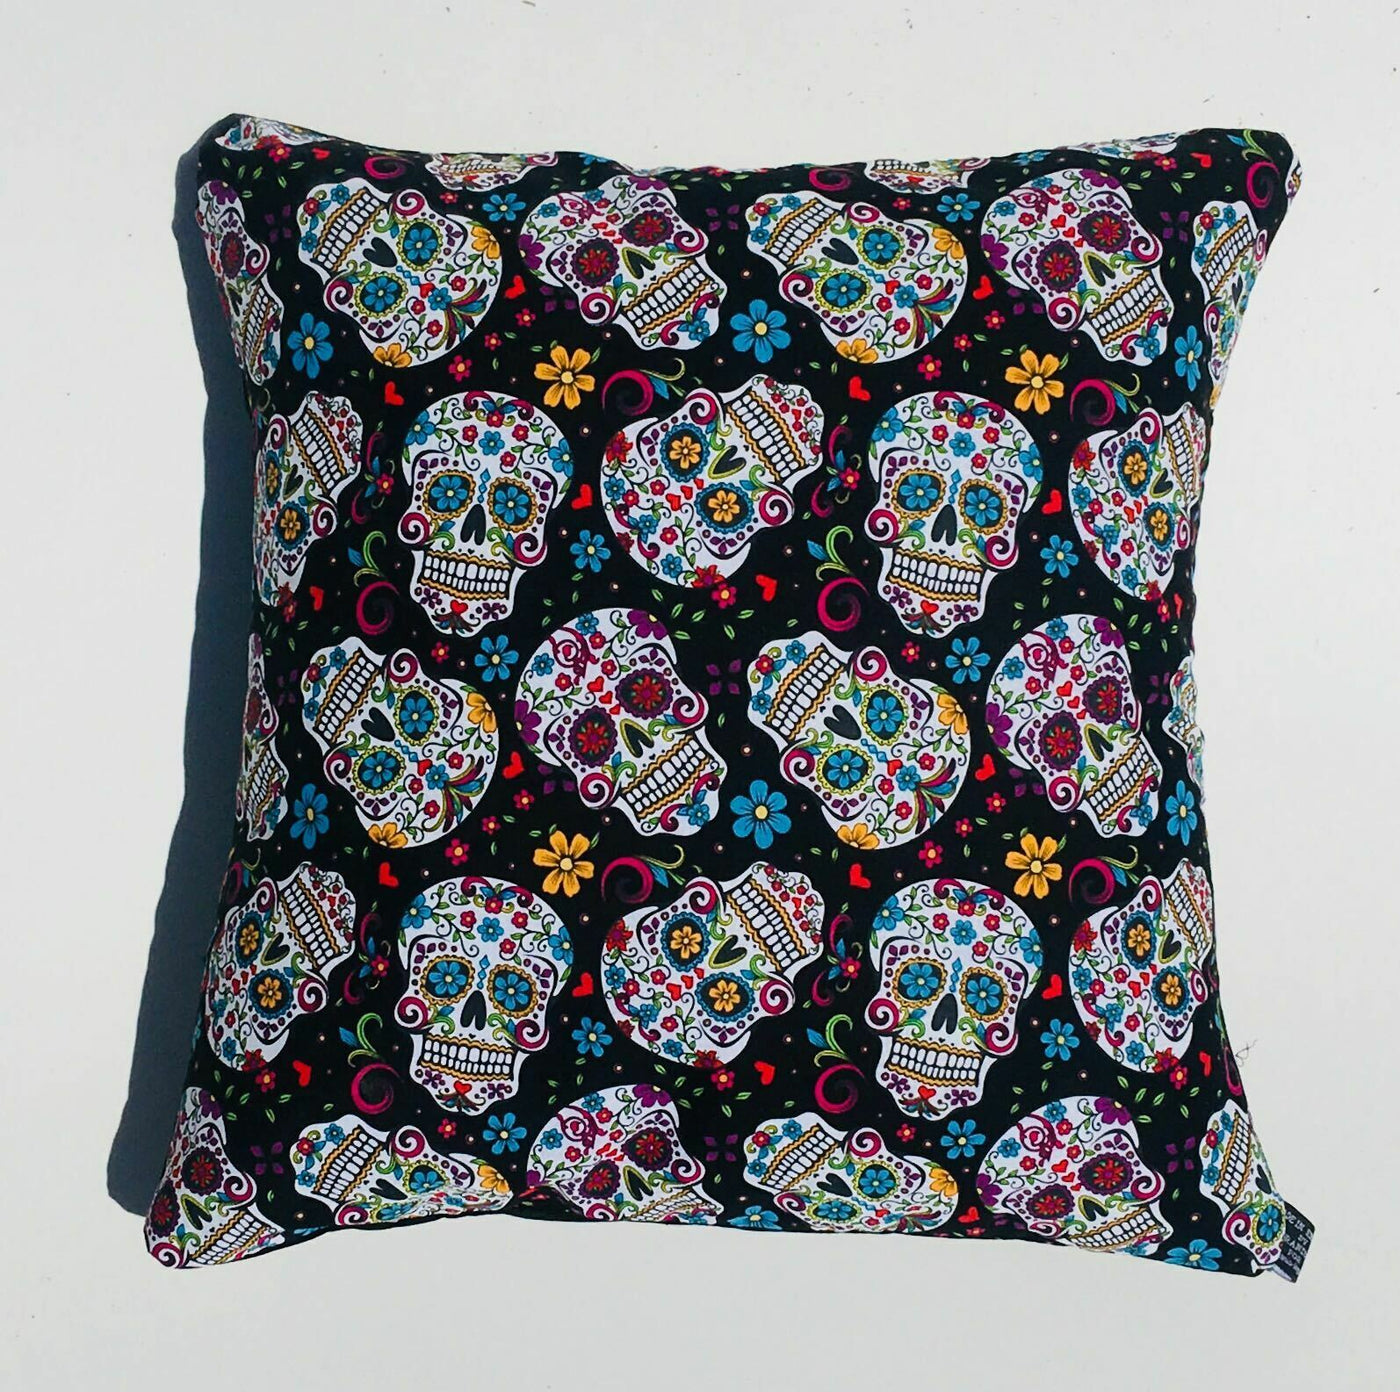 Sugar Candy Skull Cushion Cover Sofa Decorative Trendy Soft  Case fits 18" x 18"